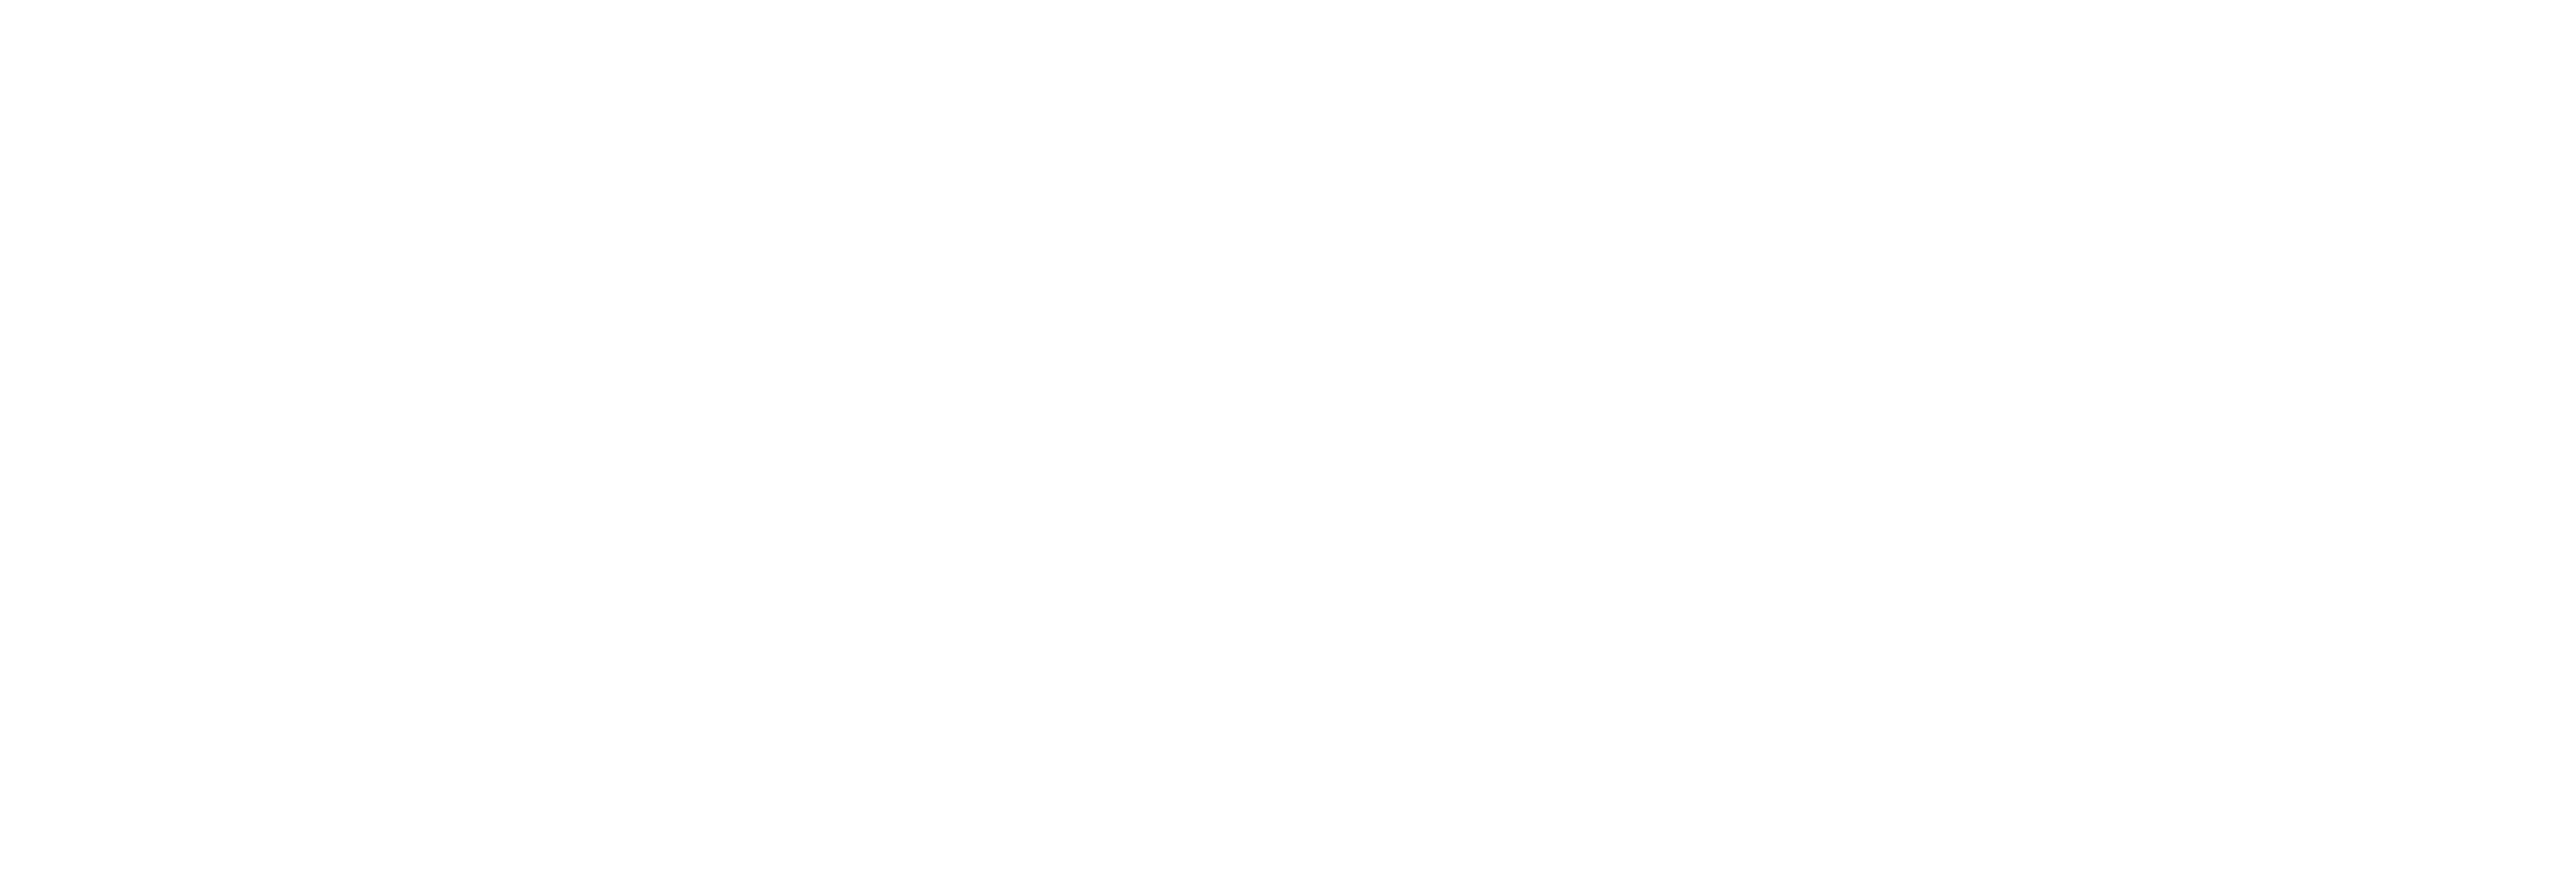 AniCura Bormujos Centro Veterinario logo